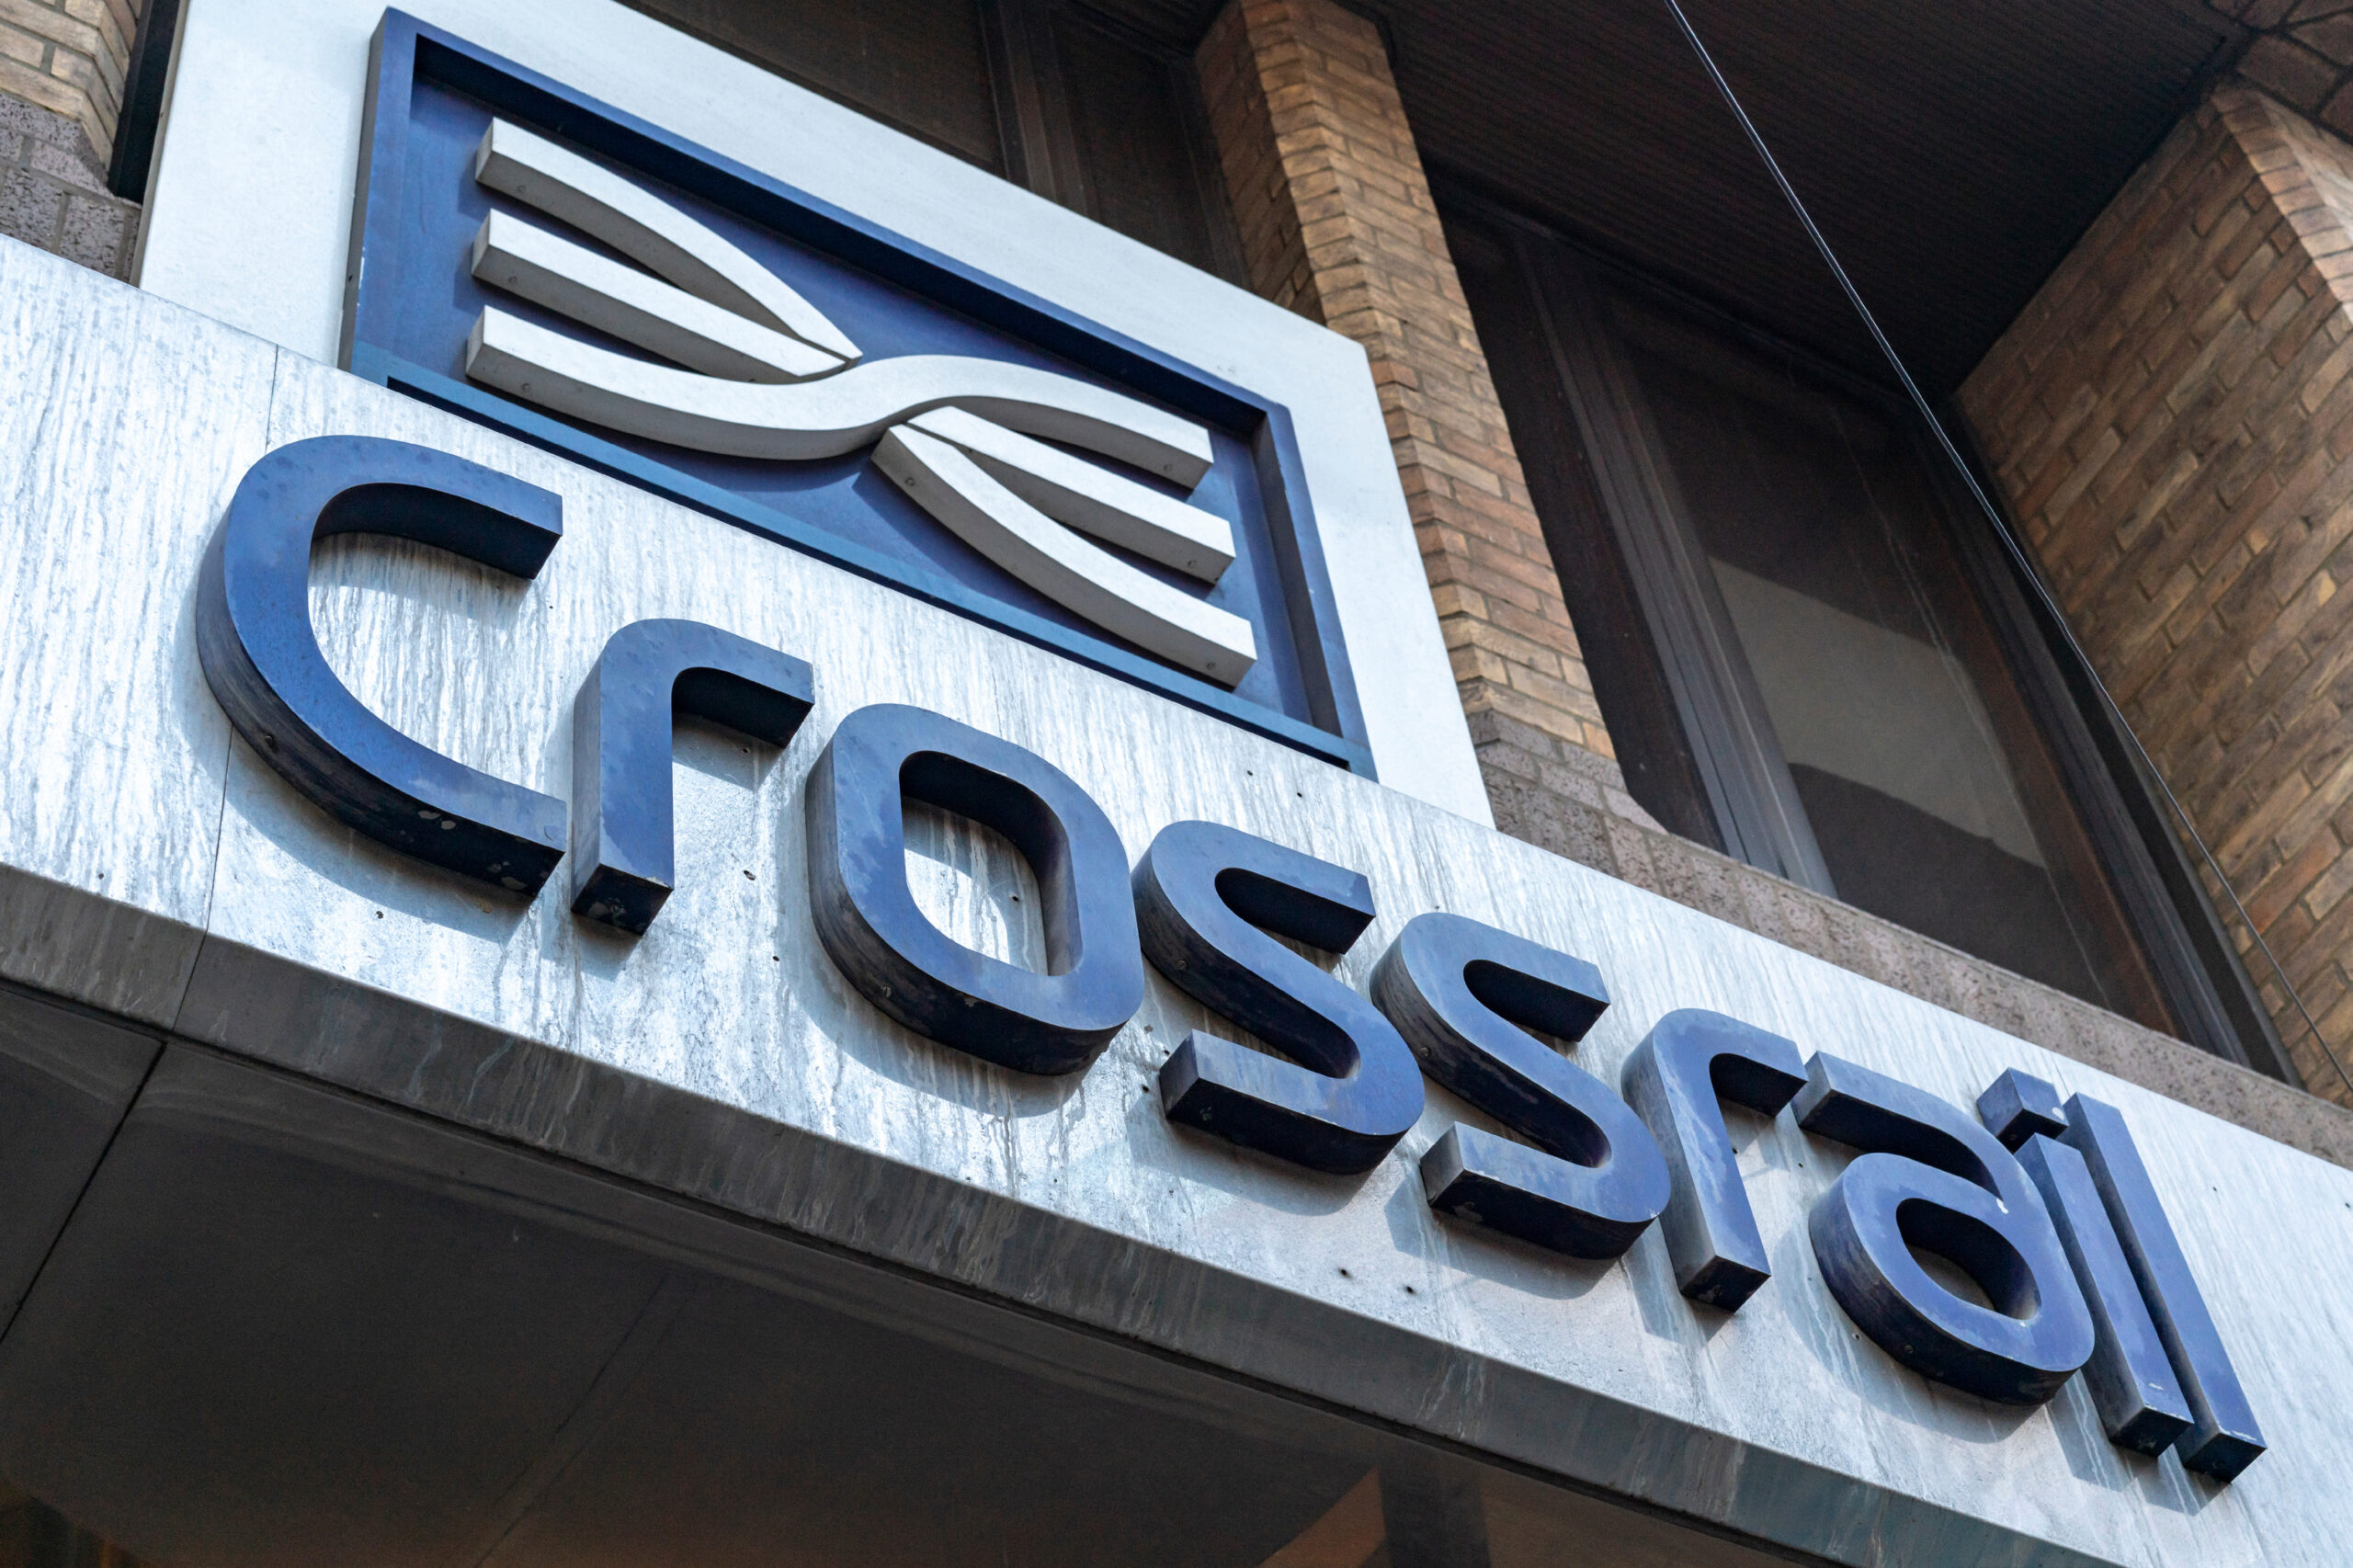 Crossrail: Sistem manajemen keselamatan baru mengurangi risiko